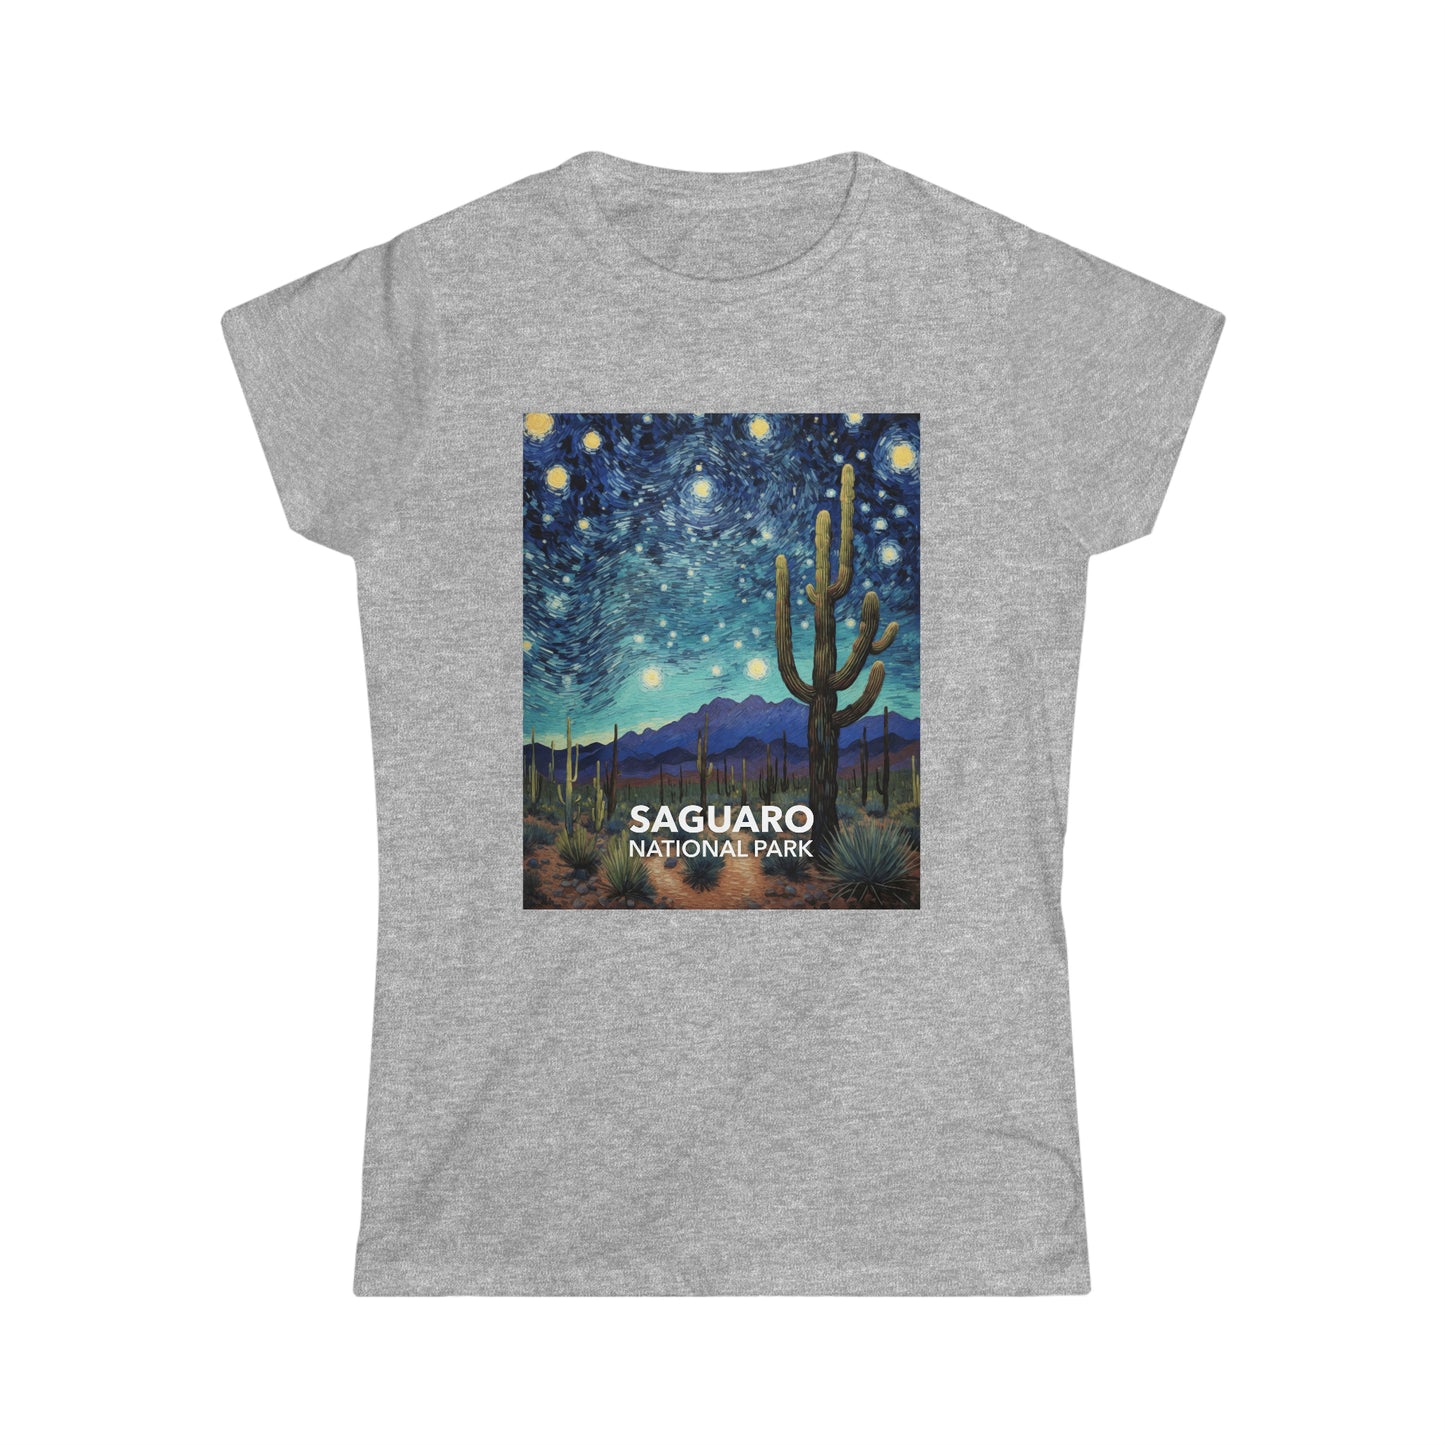 Saguaro National Park T-Shirt - Women's Starry Night